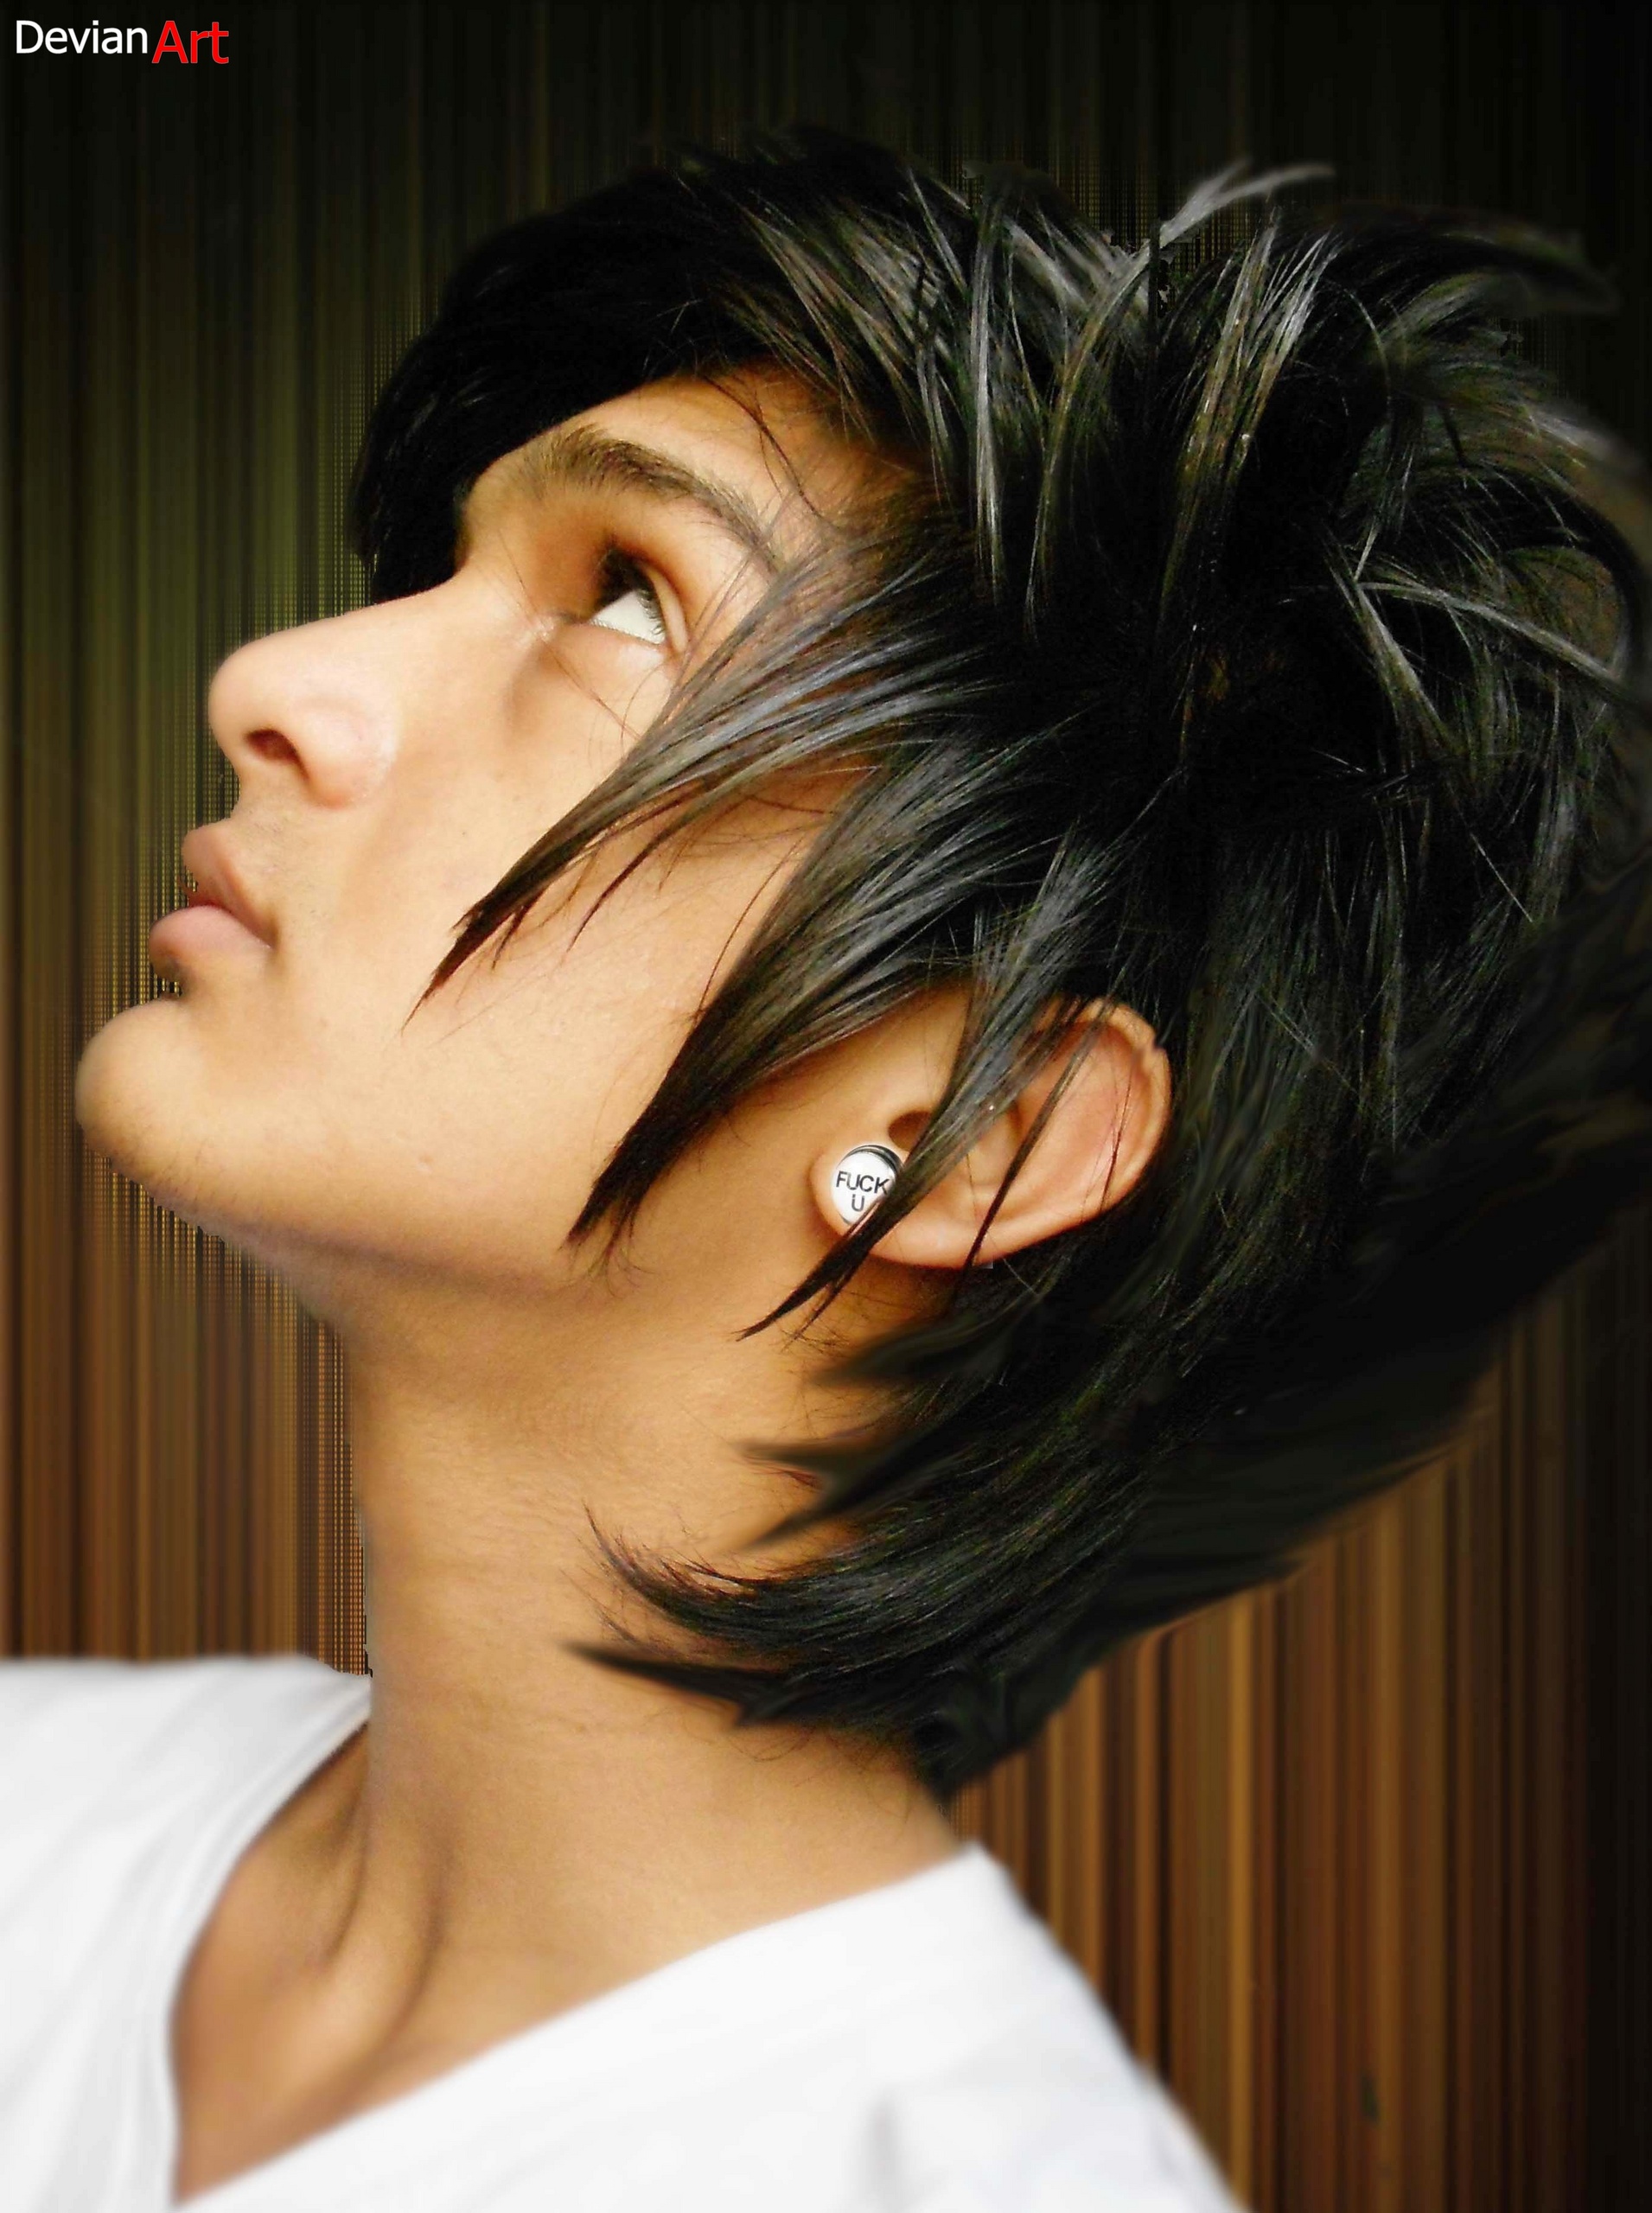 hairstyle for men- new hairstyle - hair cut - Hair Photo (37128463) - Fanpop